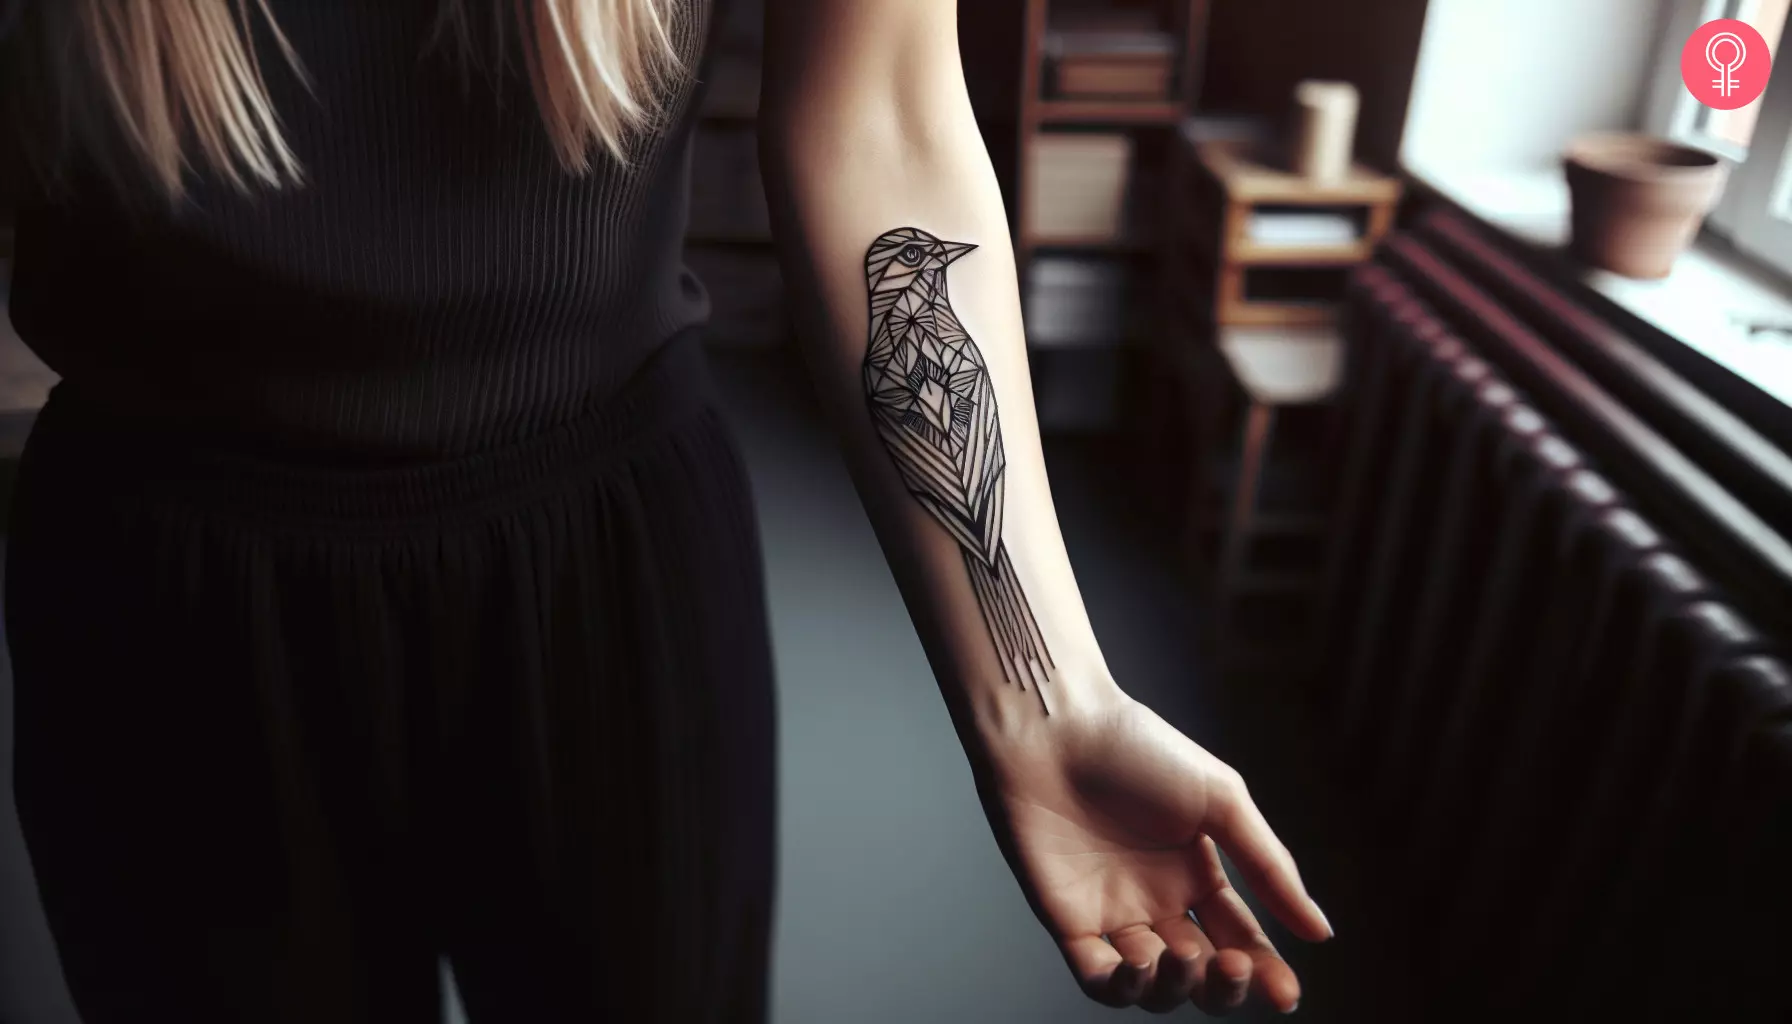 Geometric bird tattoo on the forearm of a woman